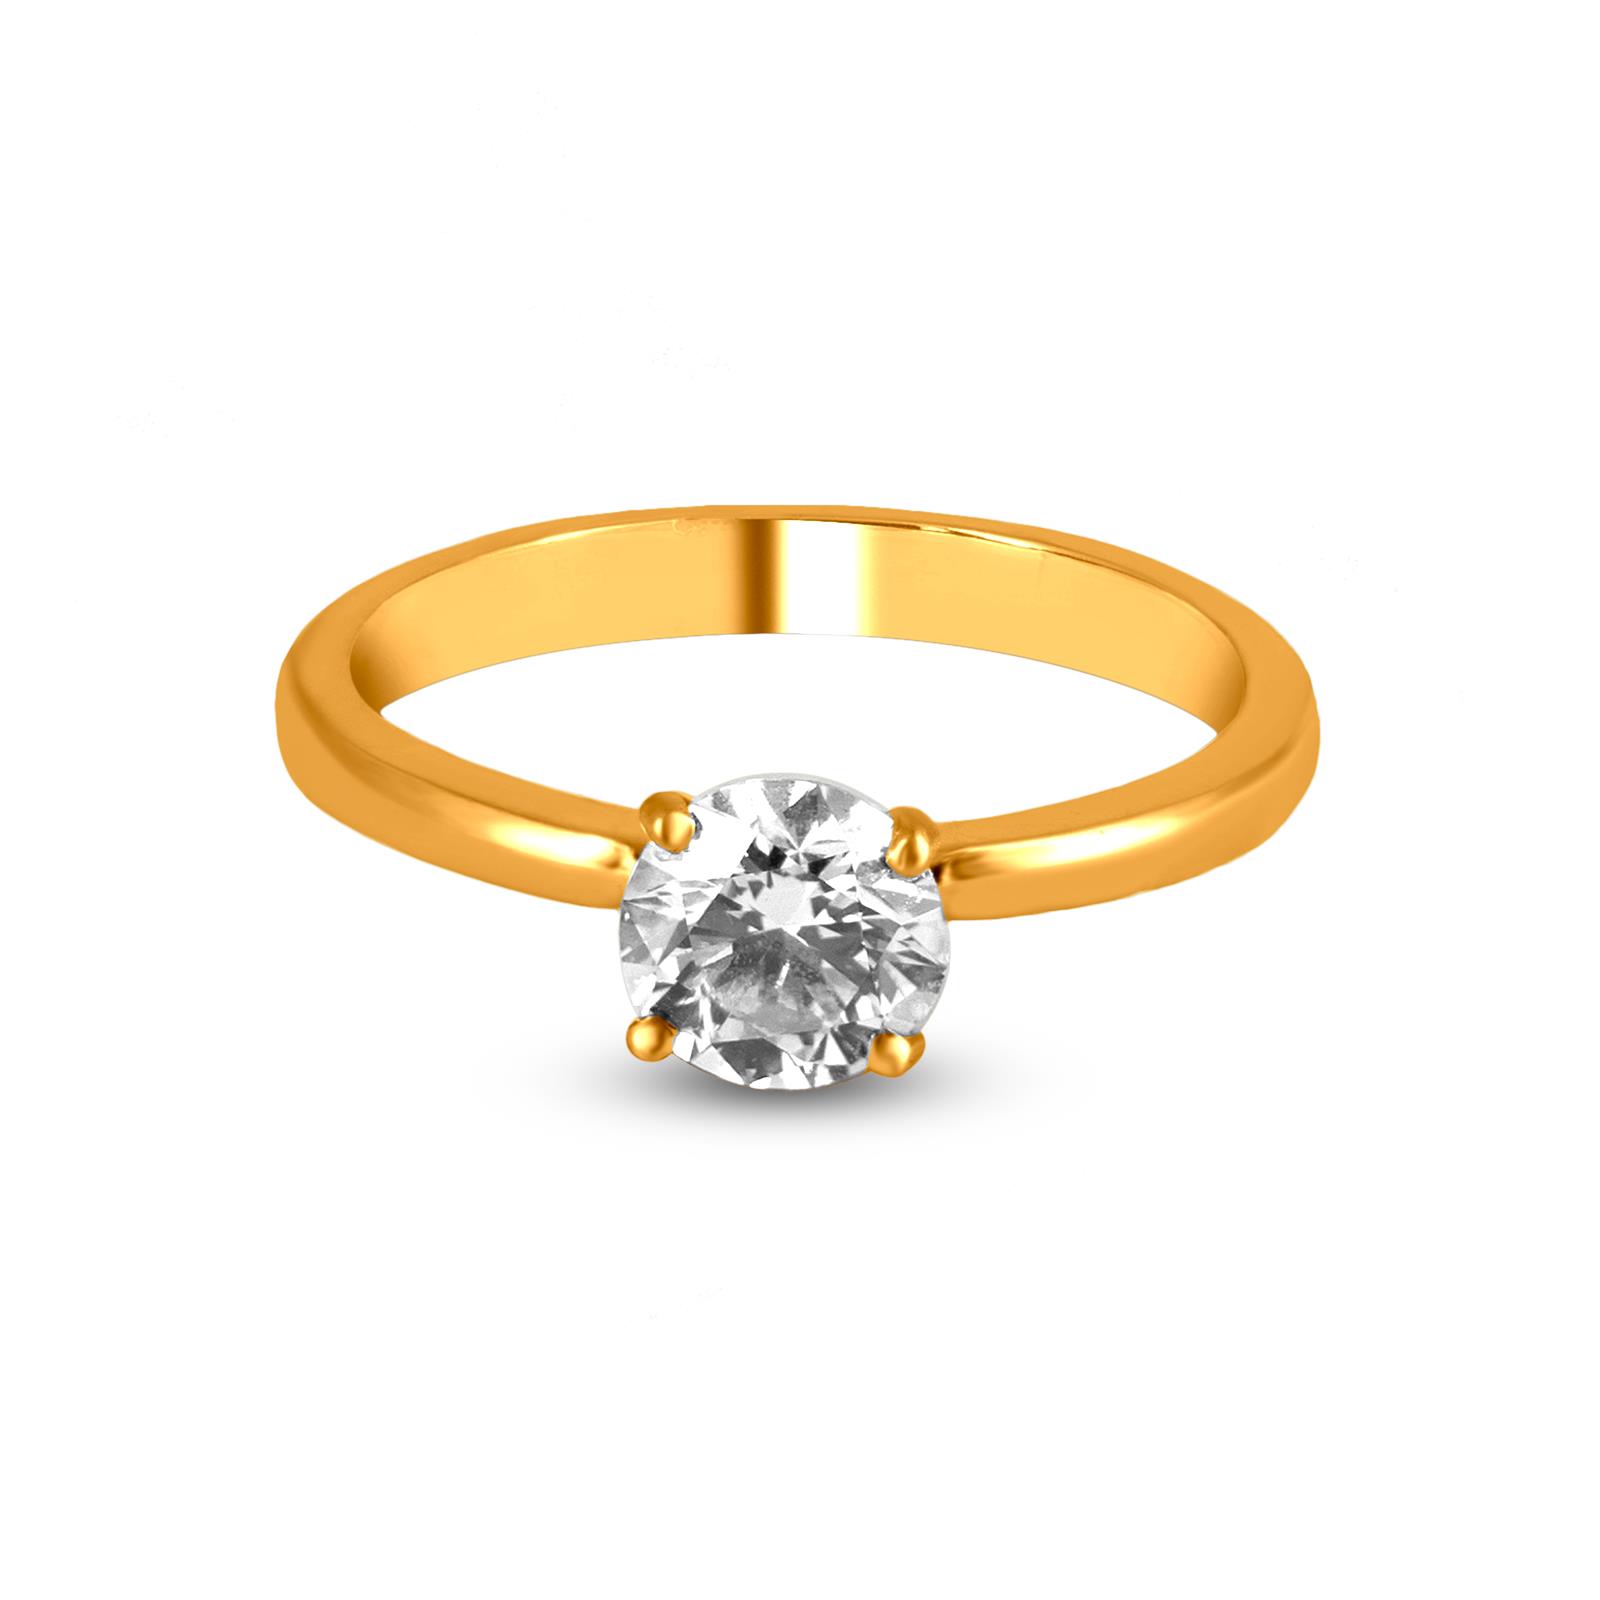 Gorgeous 18k Diamond Ring | Gold and Diamond Ring for Ladies